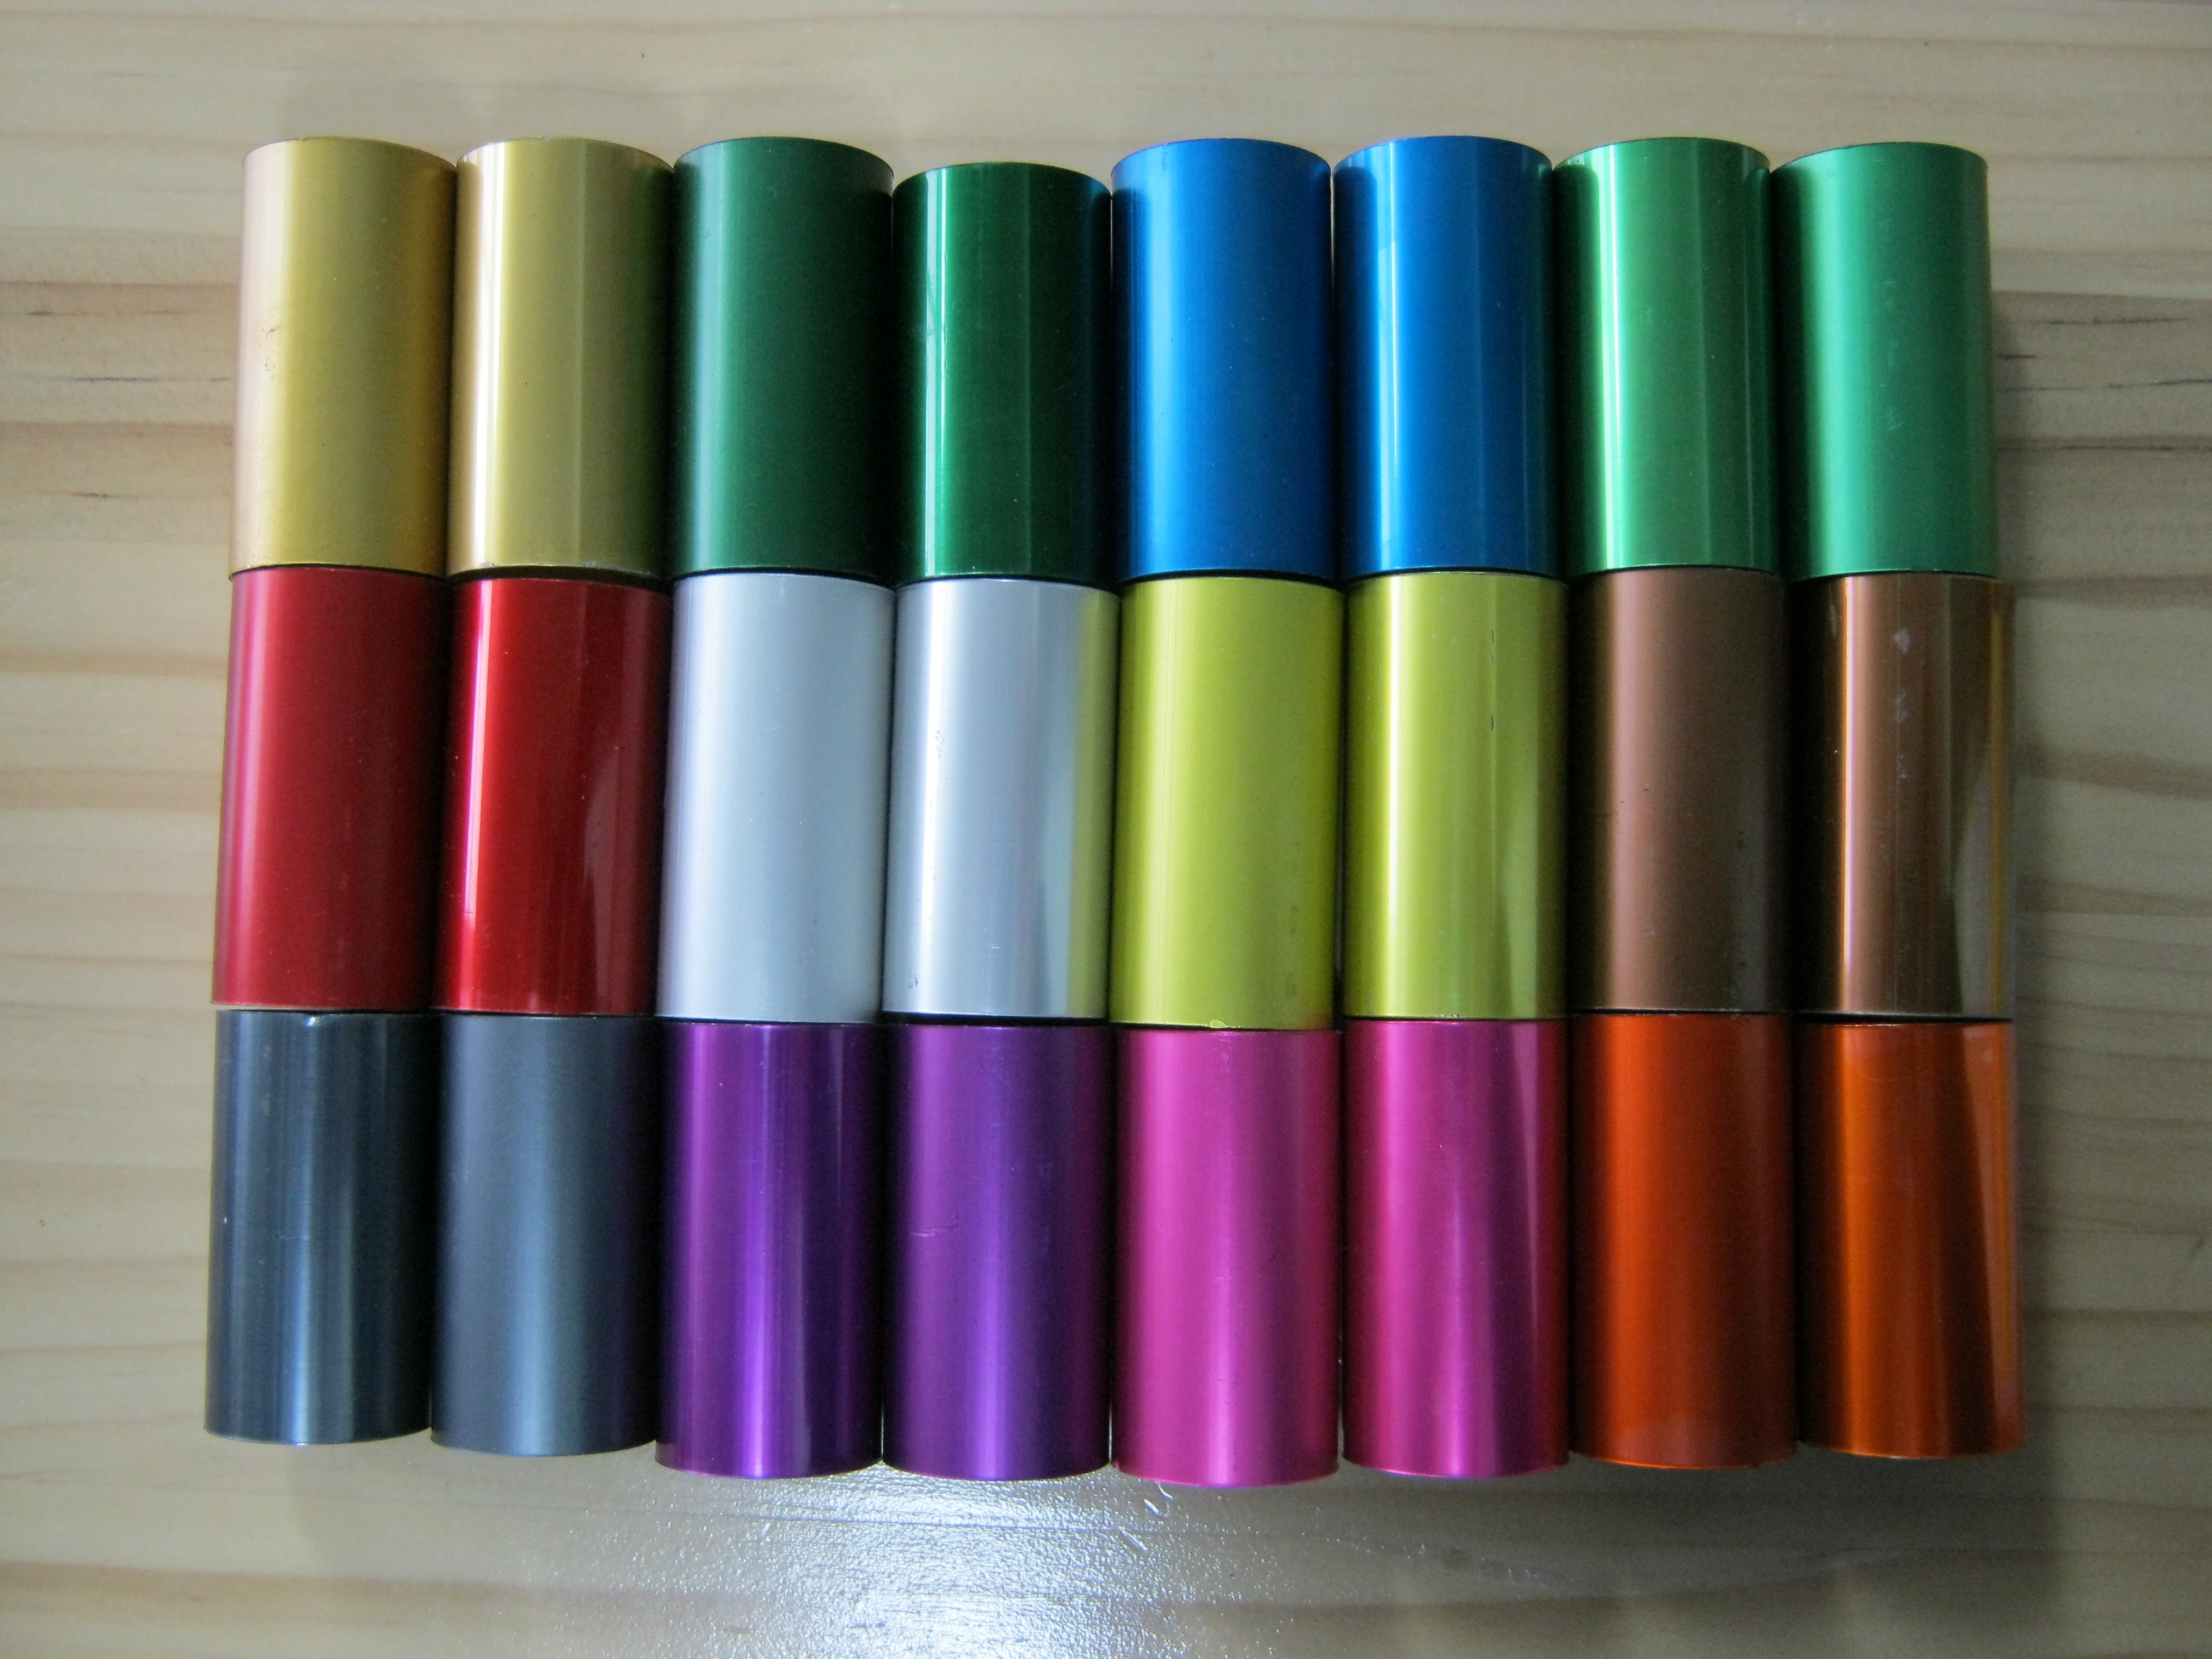 Anodized Aluminum Colors Chart